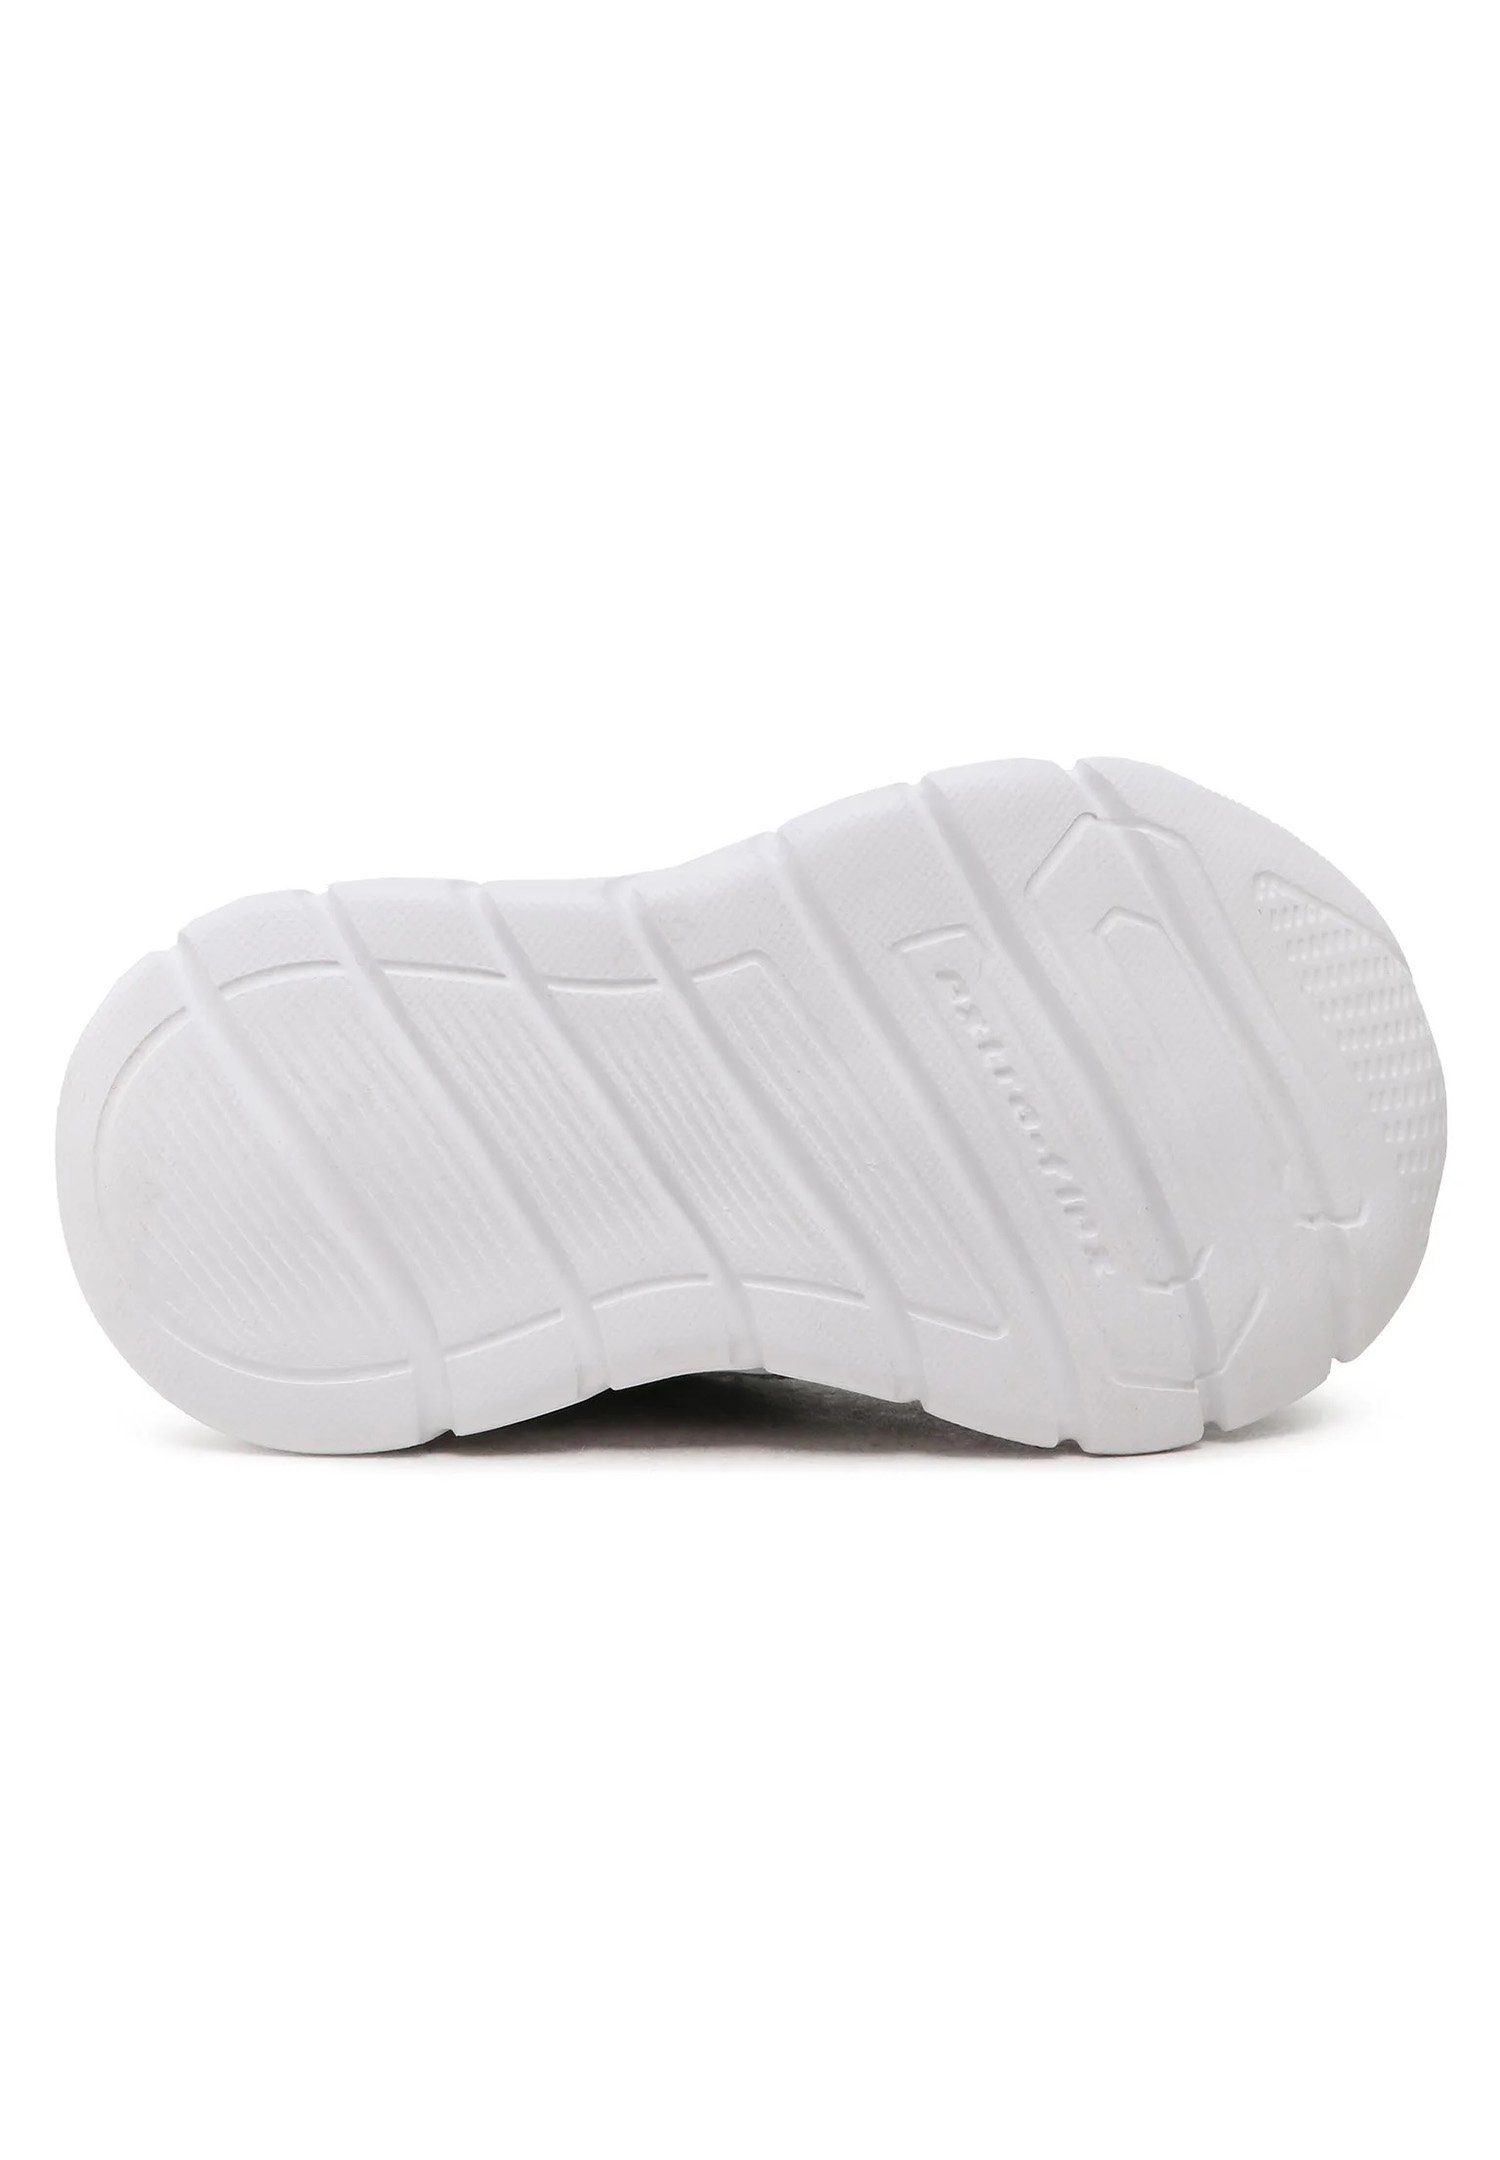 Skechers Sneaker Mini Comfy Trainer Flex